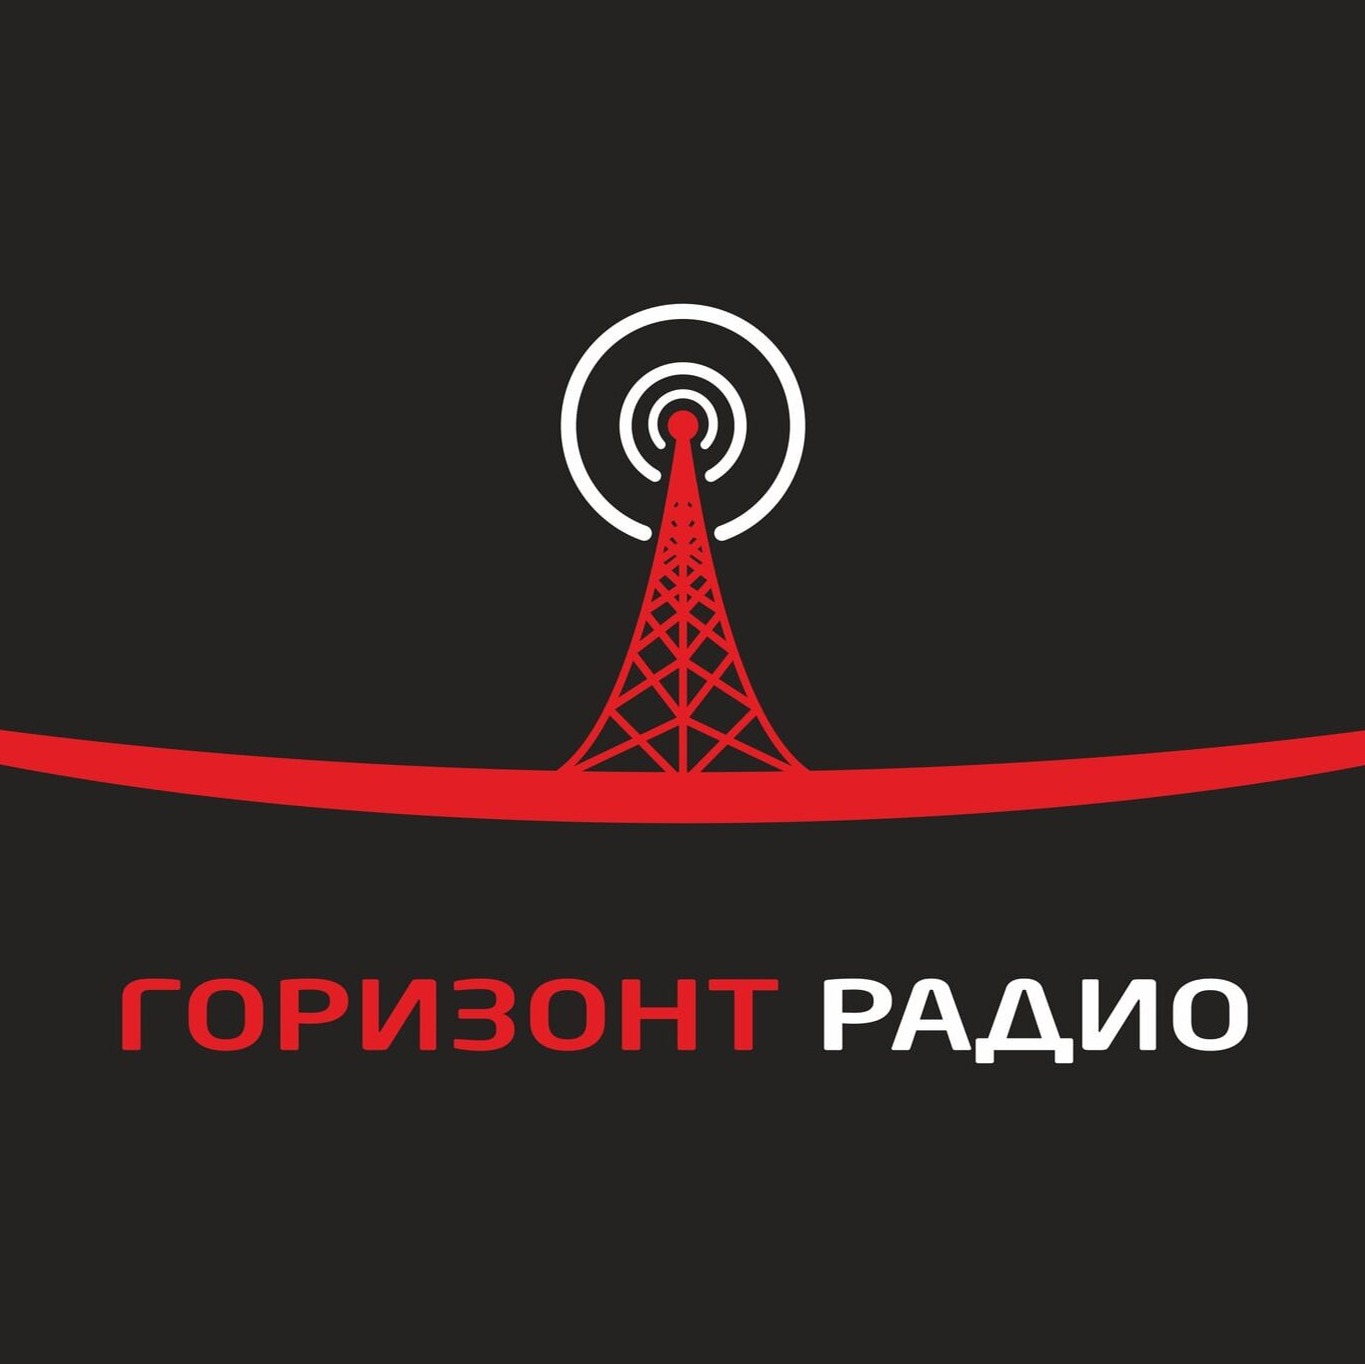 Горизонт радио сервис Ростов. Логотип радио Горизонт. Логотип радиоприёмника Горизонт. Фото приложения Russia Radio.